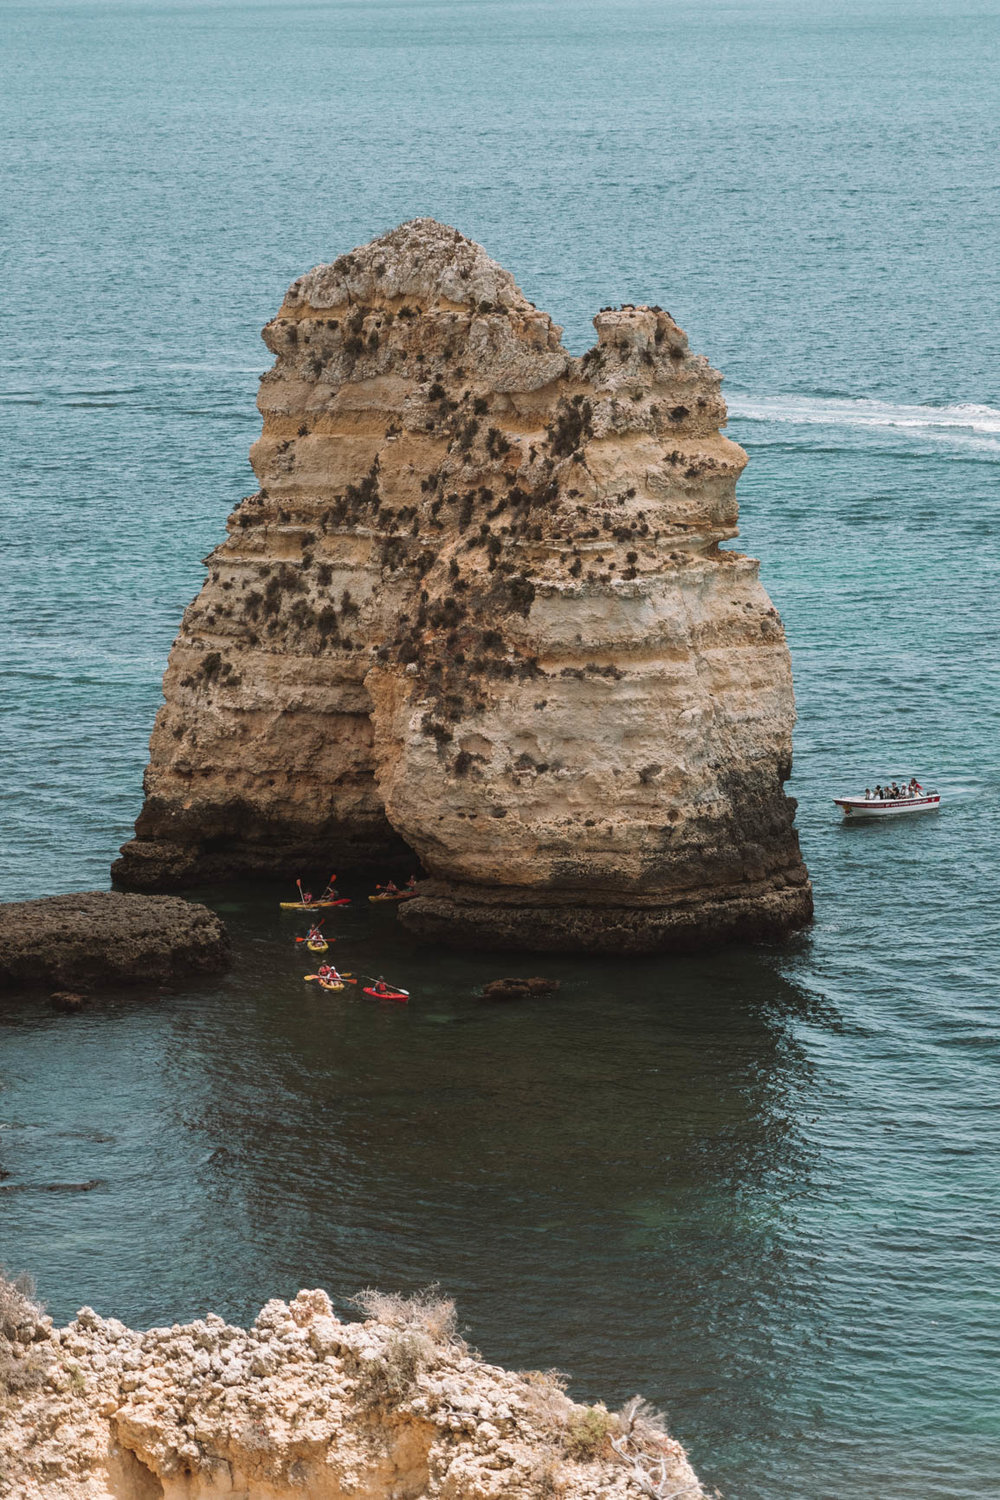 Kayaking in Lagos - Fun things to do in Lagos Algarve Portugal #Portugal #Europe